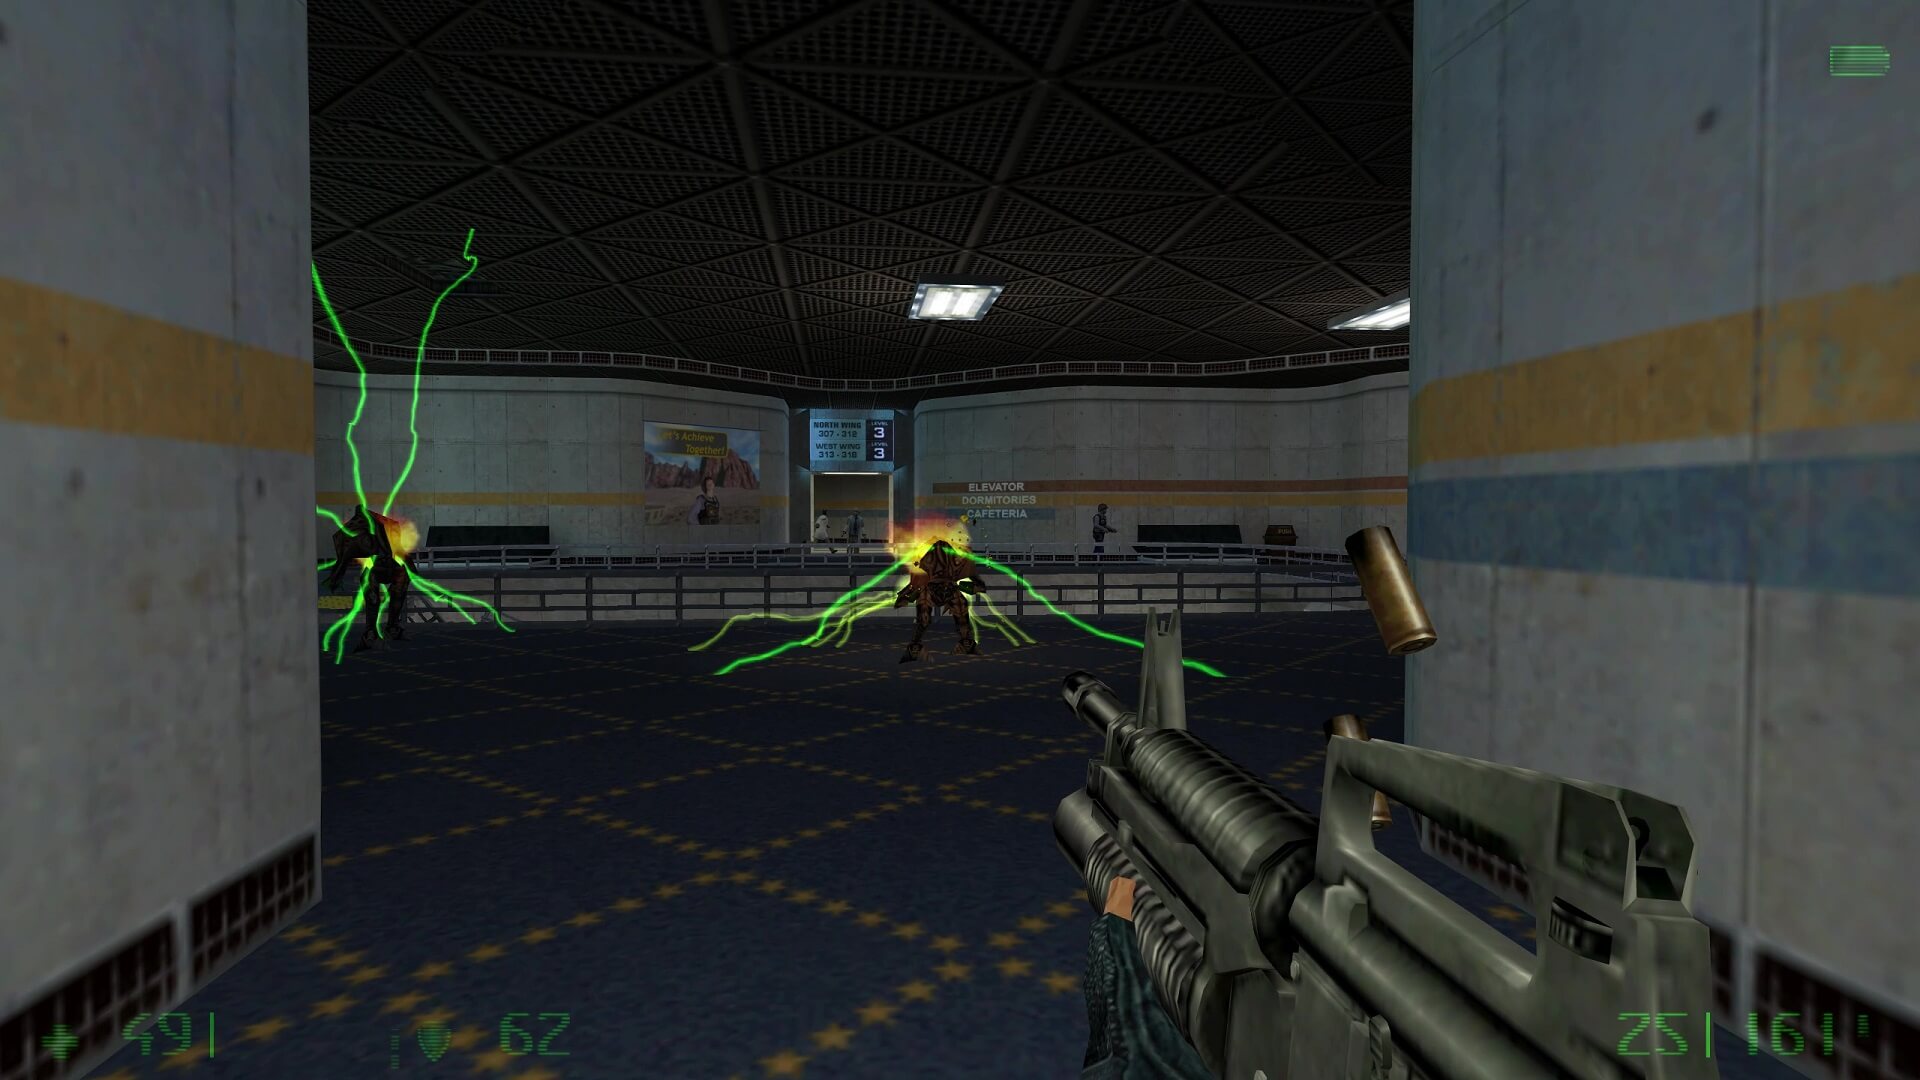 The player shooting Vortigaunts in Half-Life mod Field Intensity